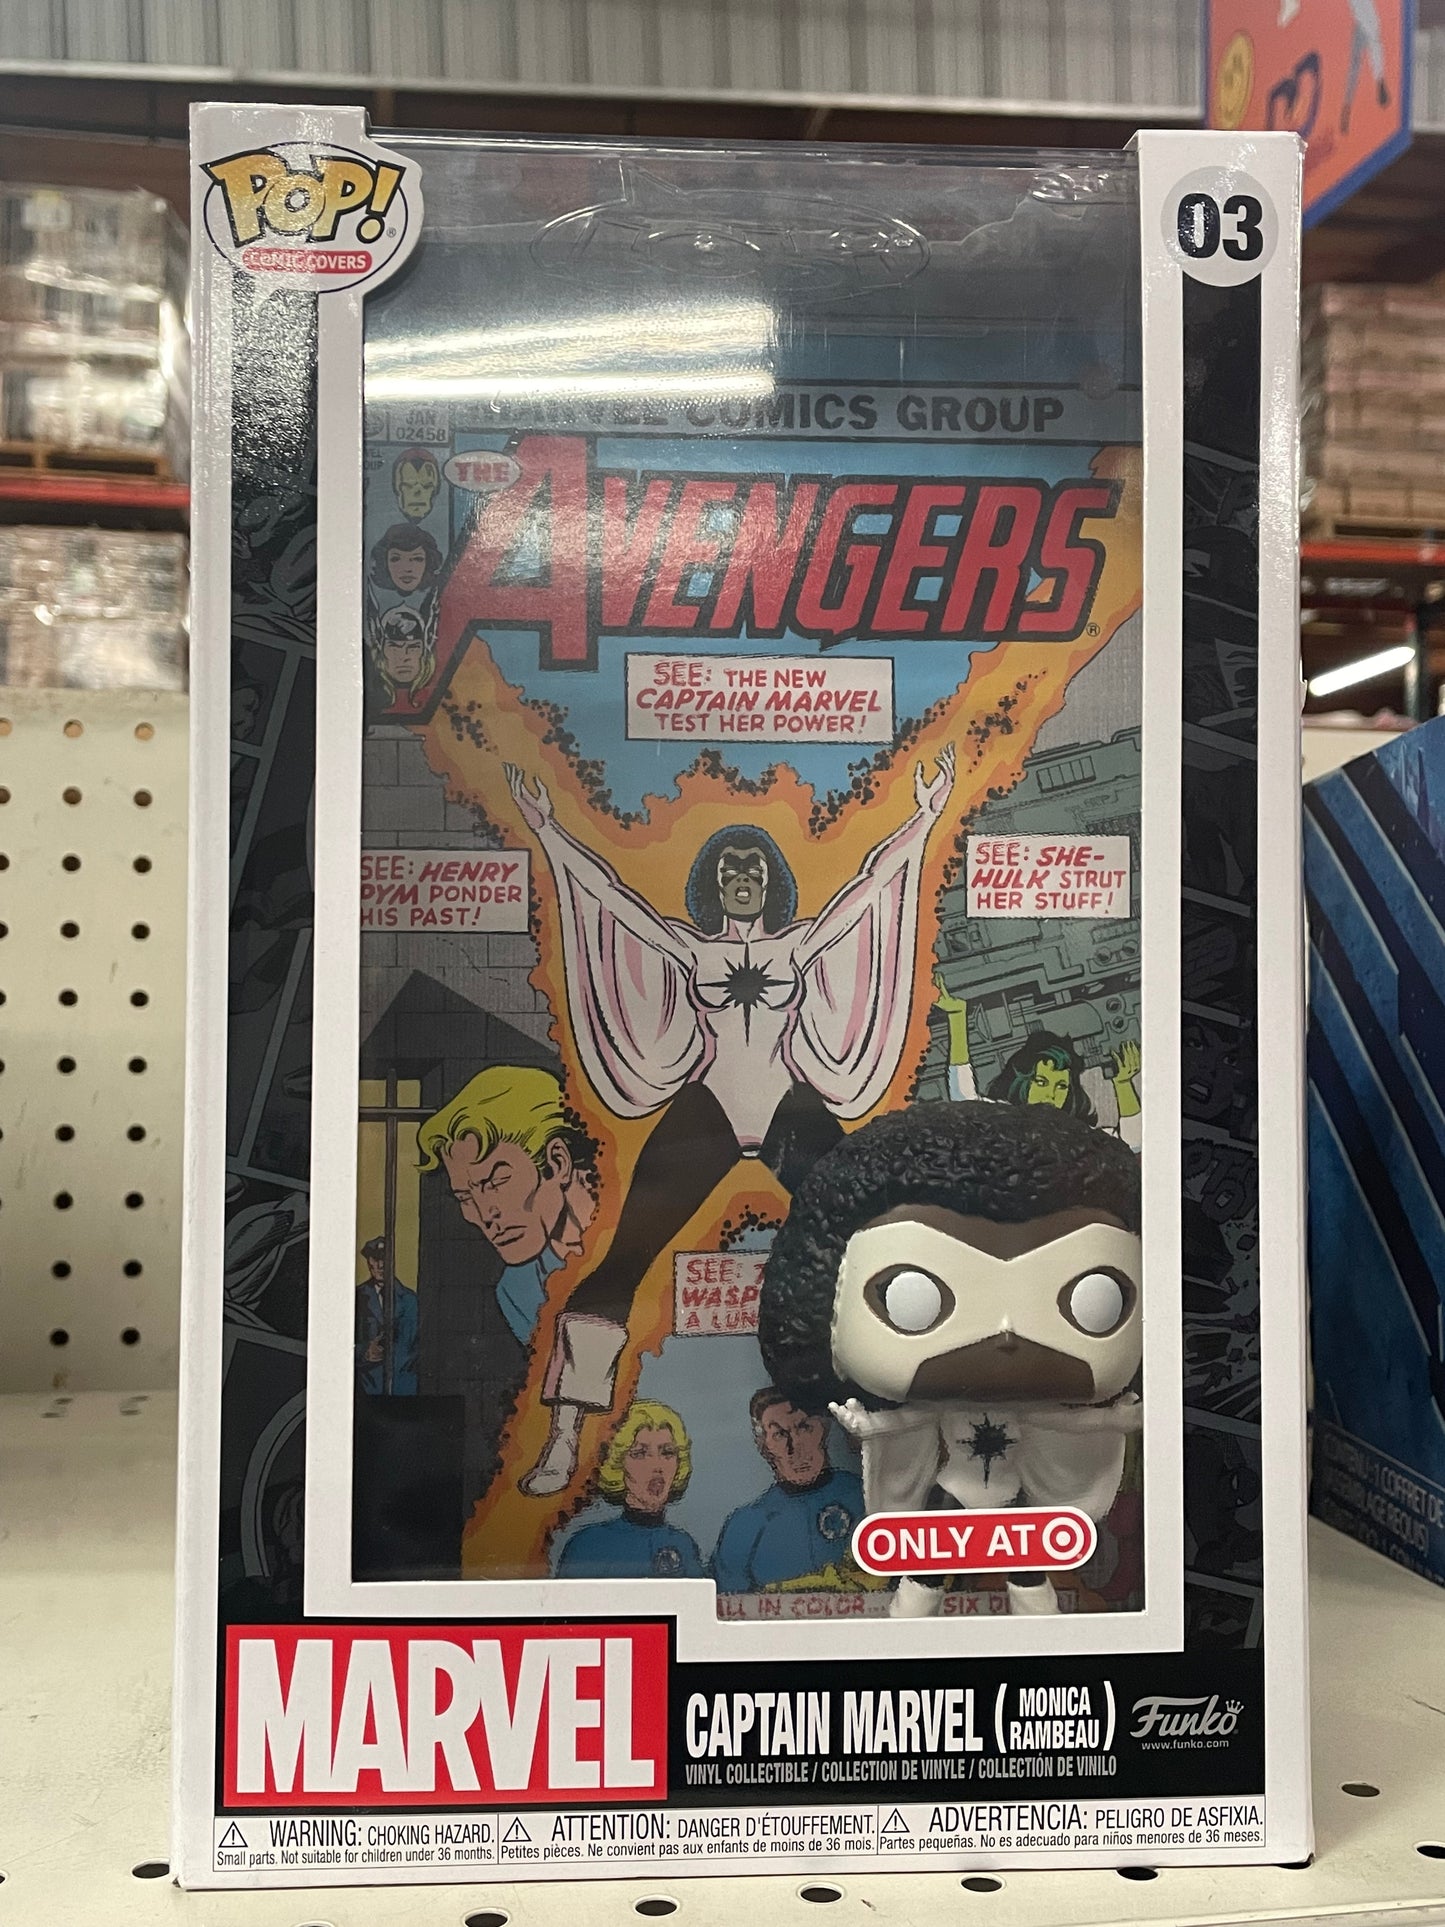 LOT #3 Funko Pop Captain Marvel (Quantity 45)  Retail $855!  Pickup Only!